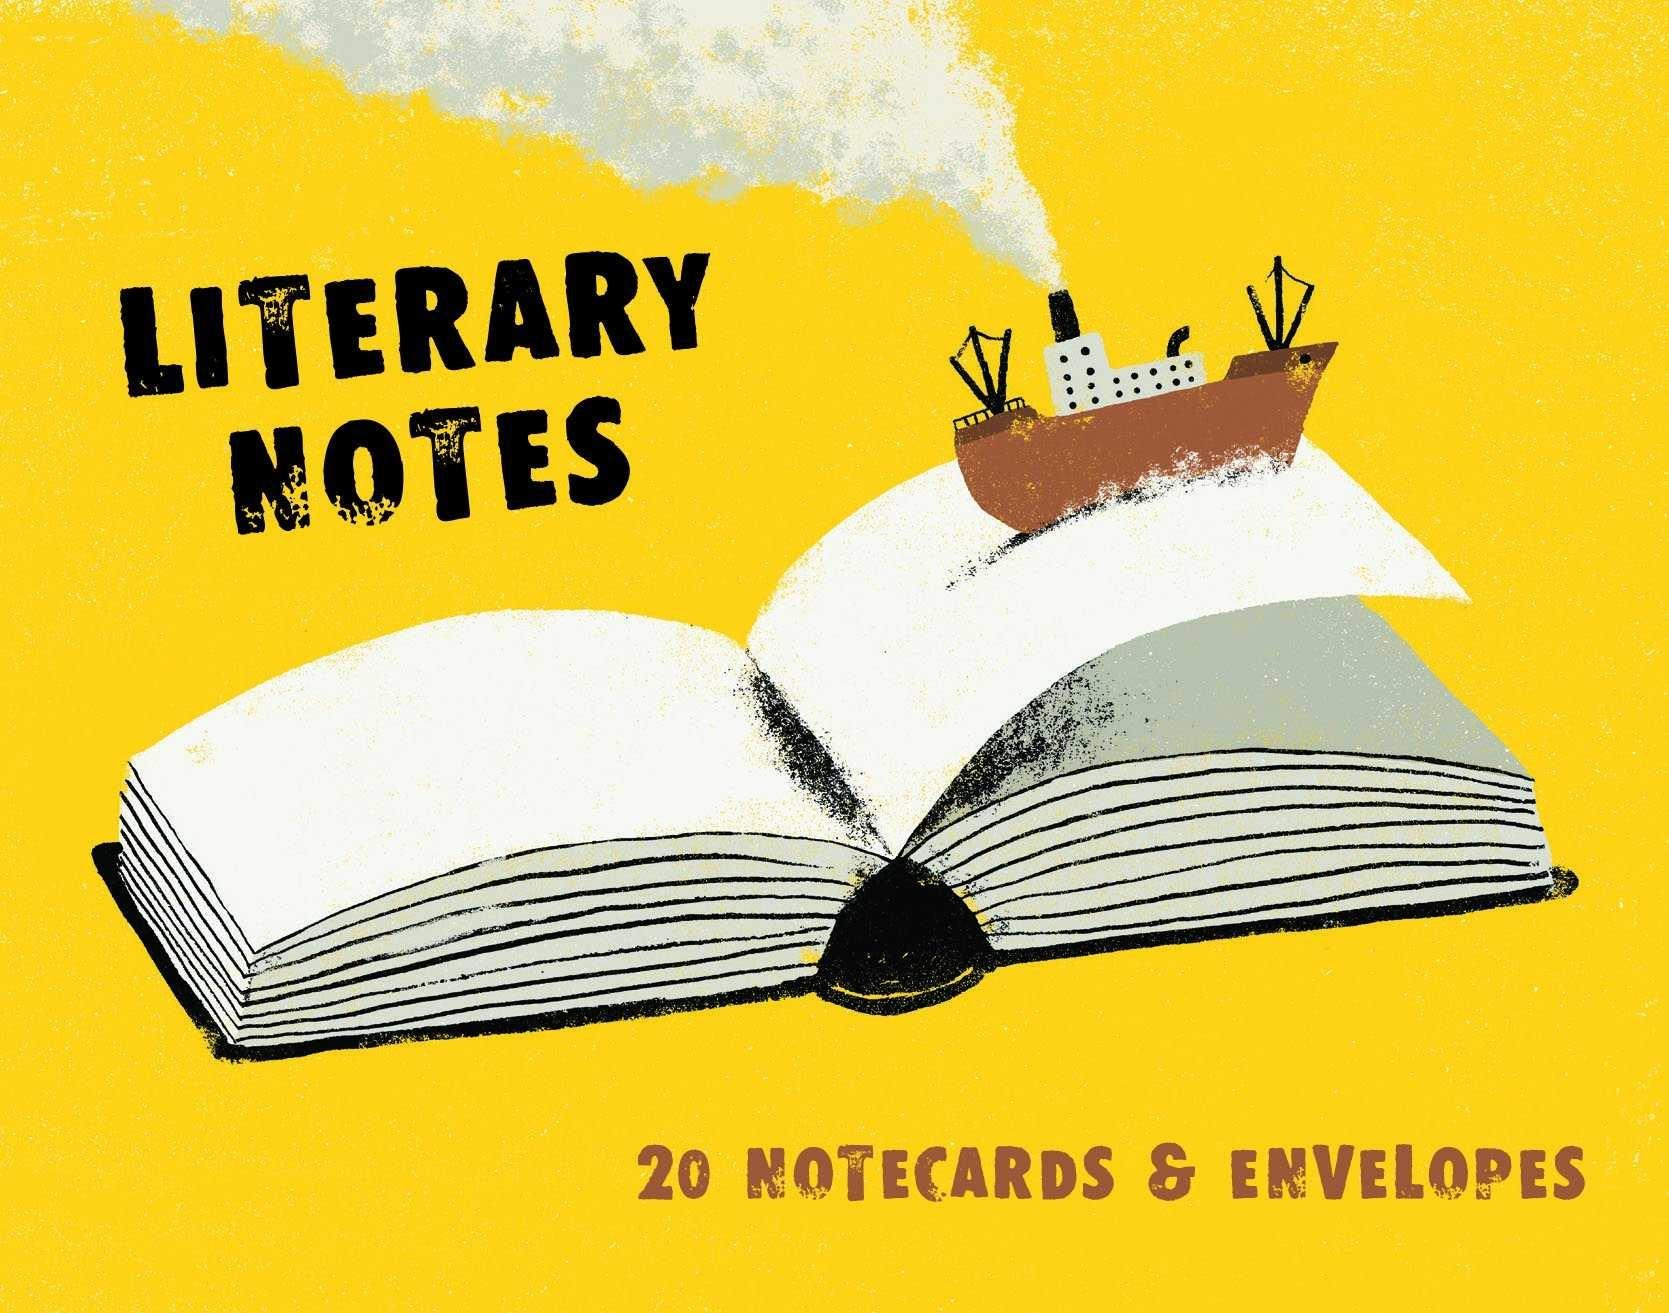 LITERARY NOTES: 20 NOTECARDS & ENVELOPES